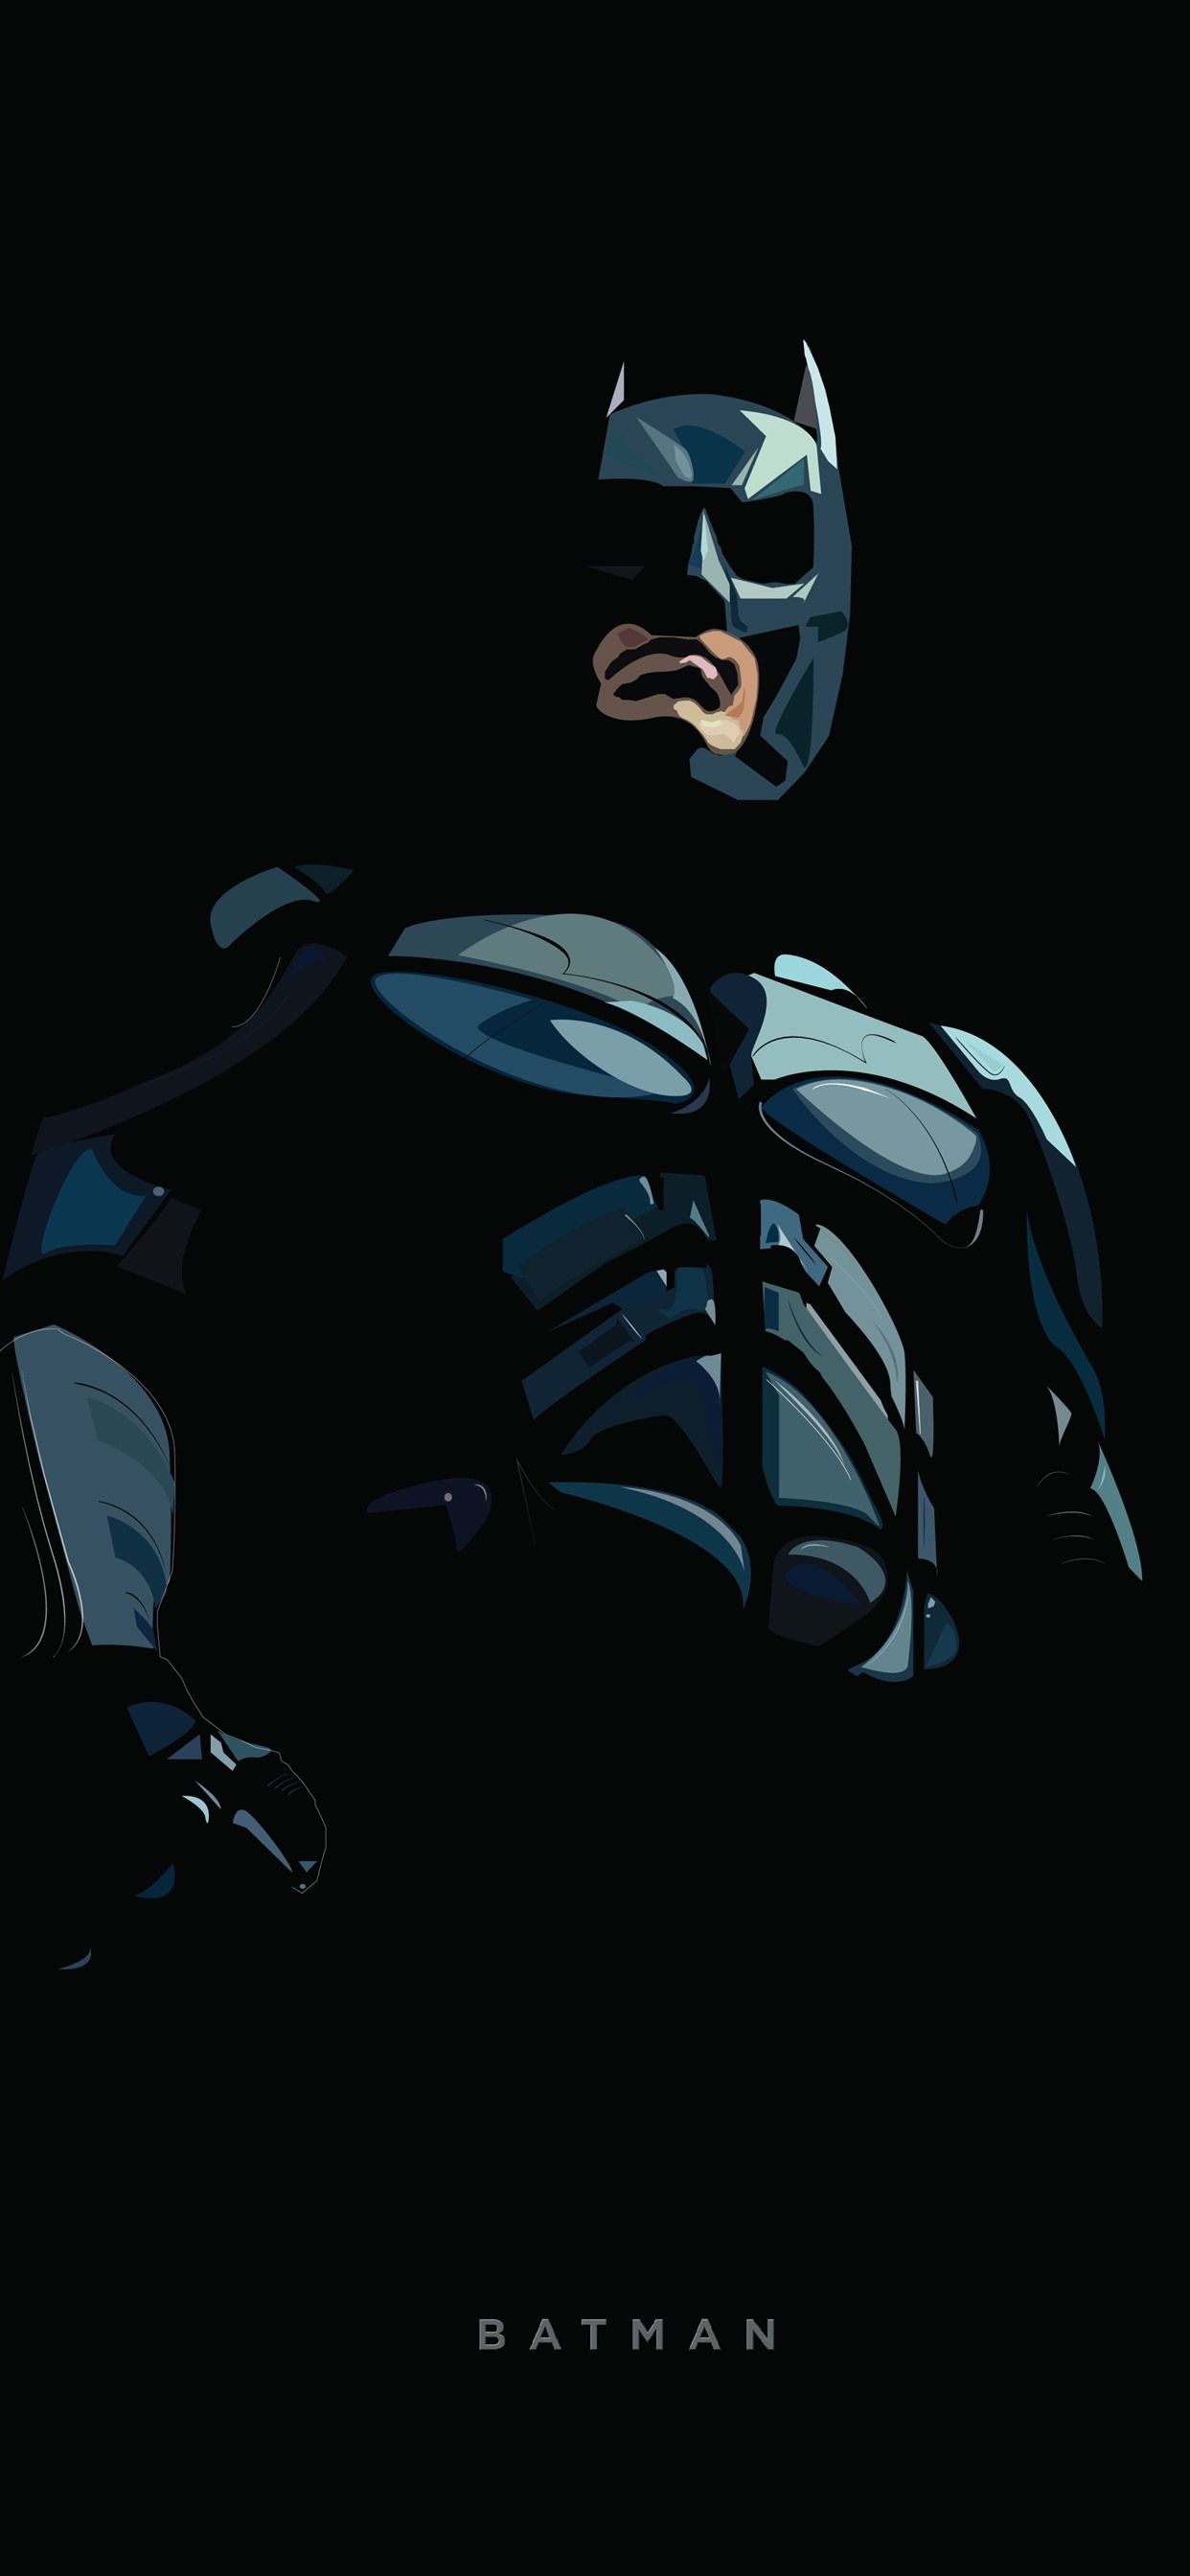 Wallpapers Batman, superhero, art picture, black backgrounds